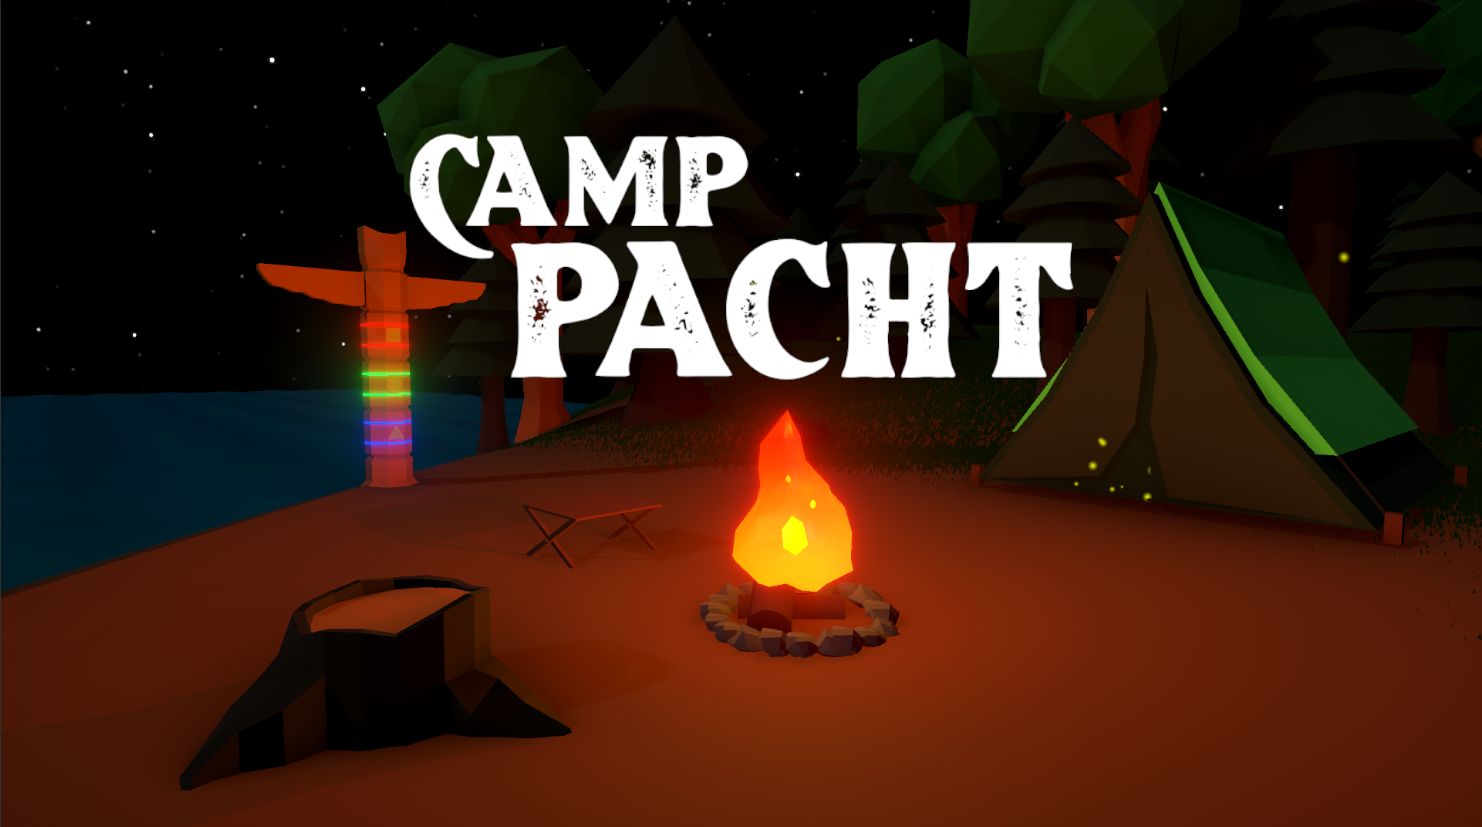 Camp Pacht